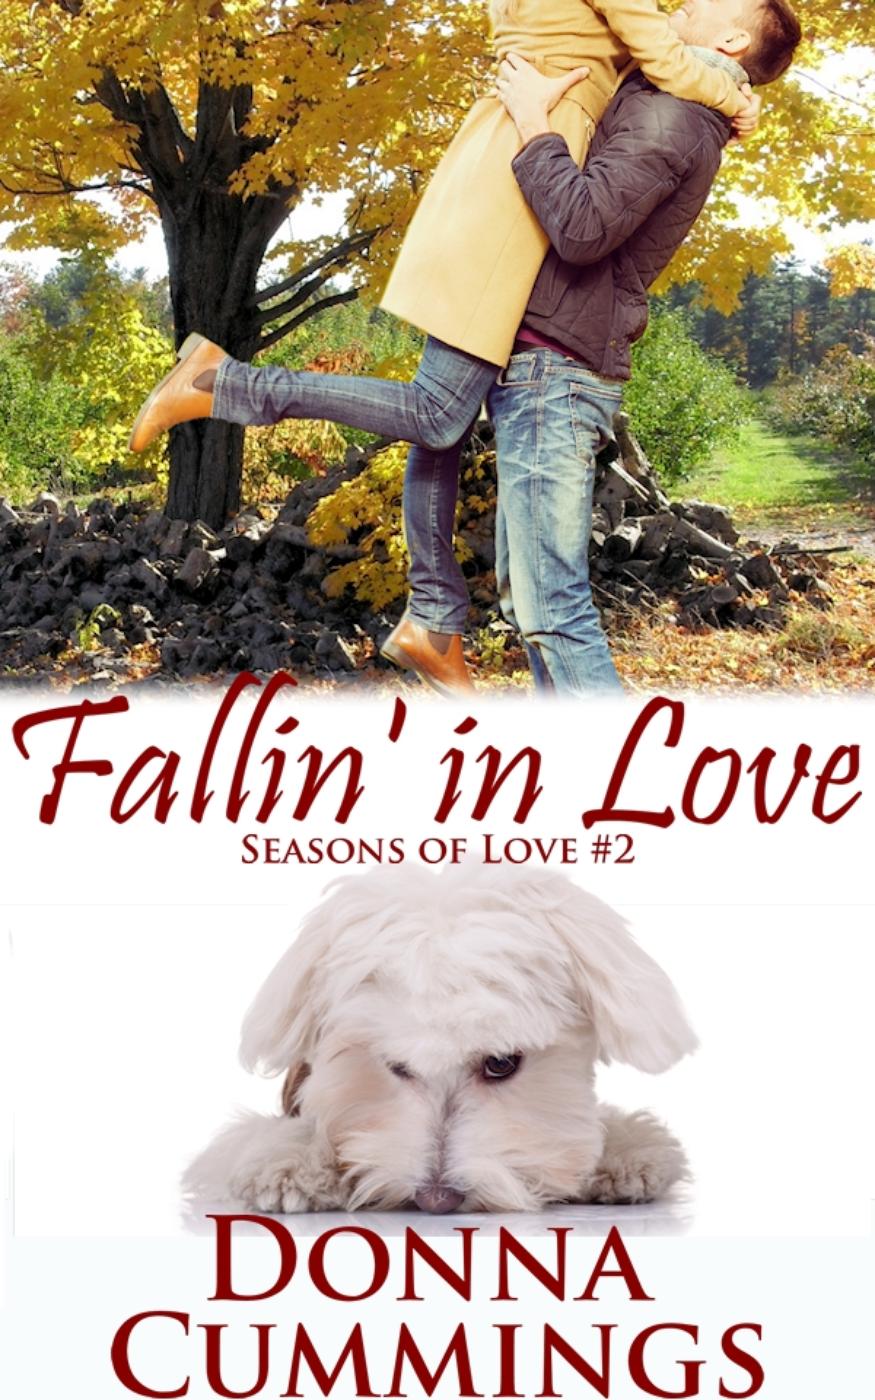 Fallin' in Love by Donna Cummings